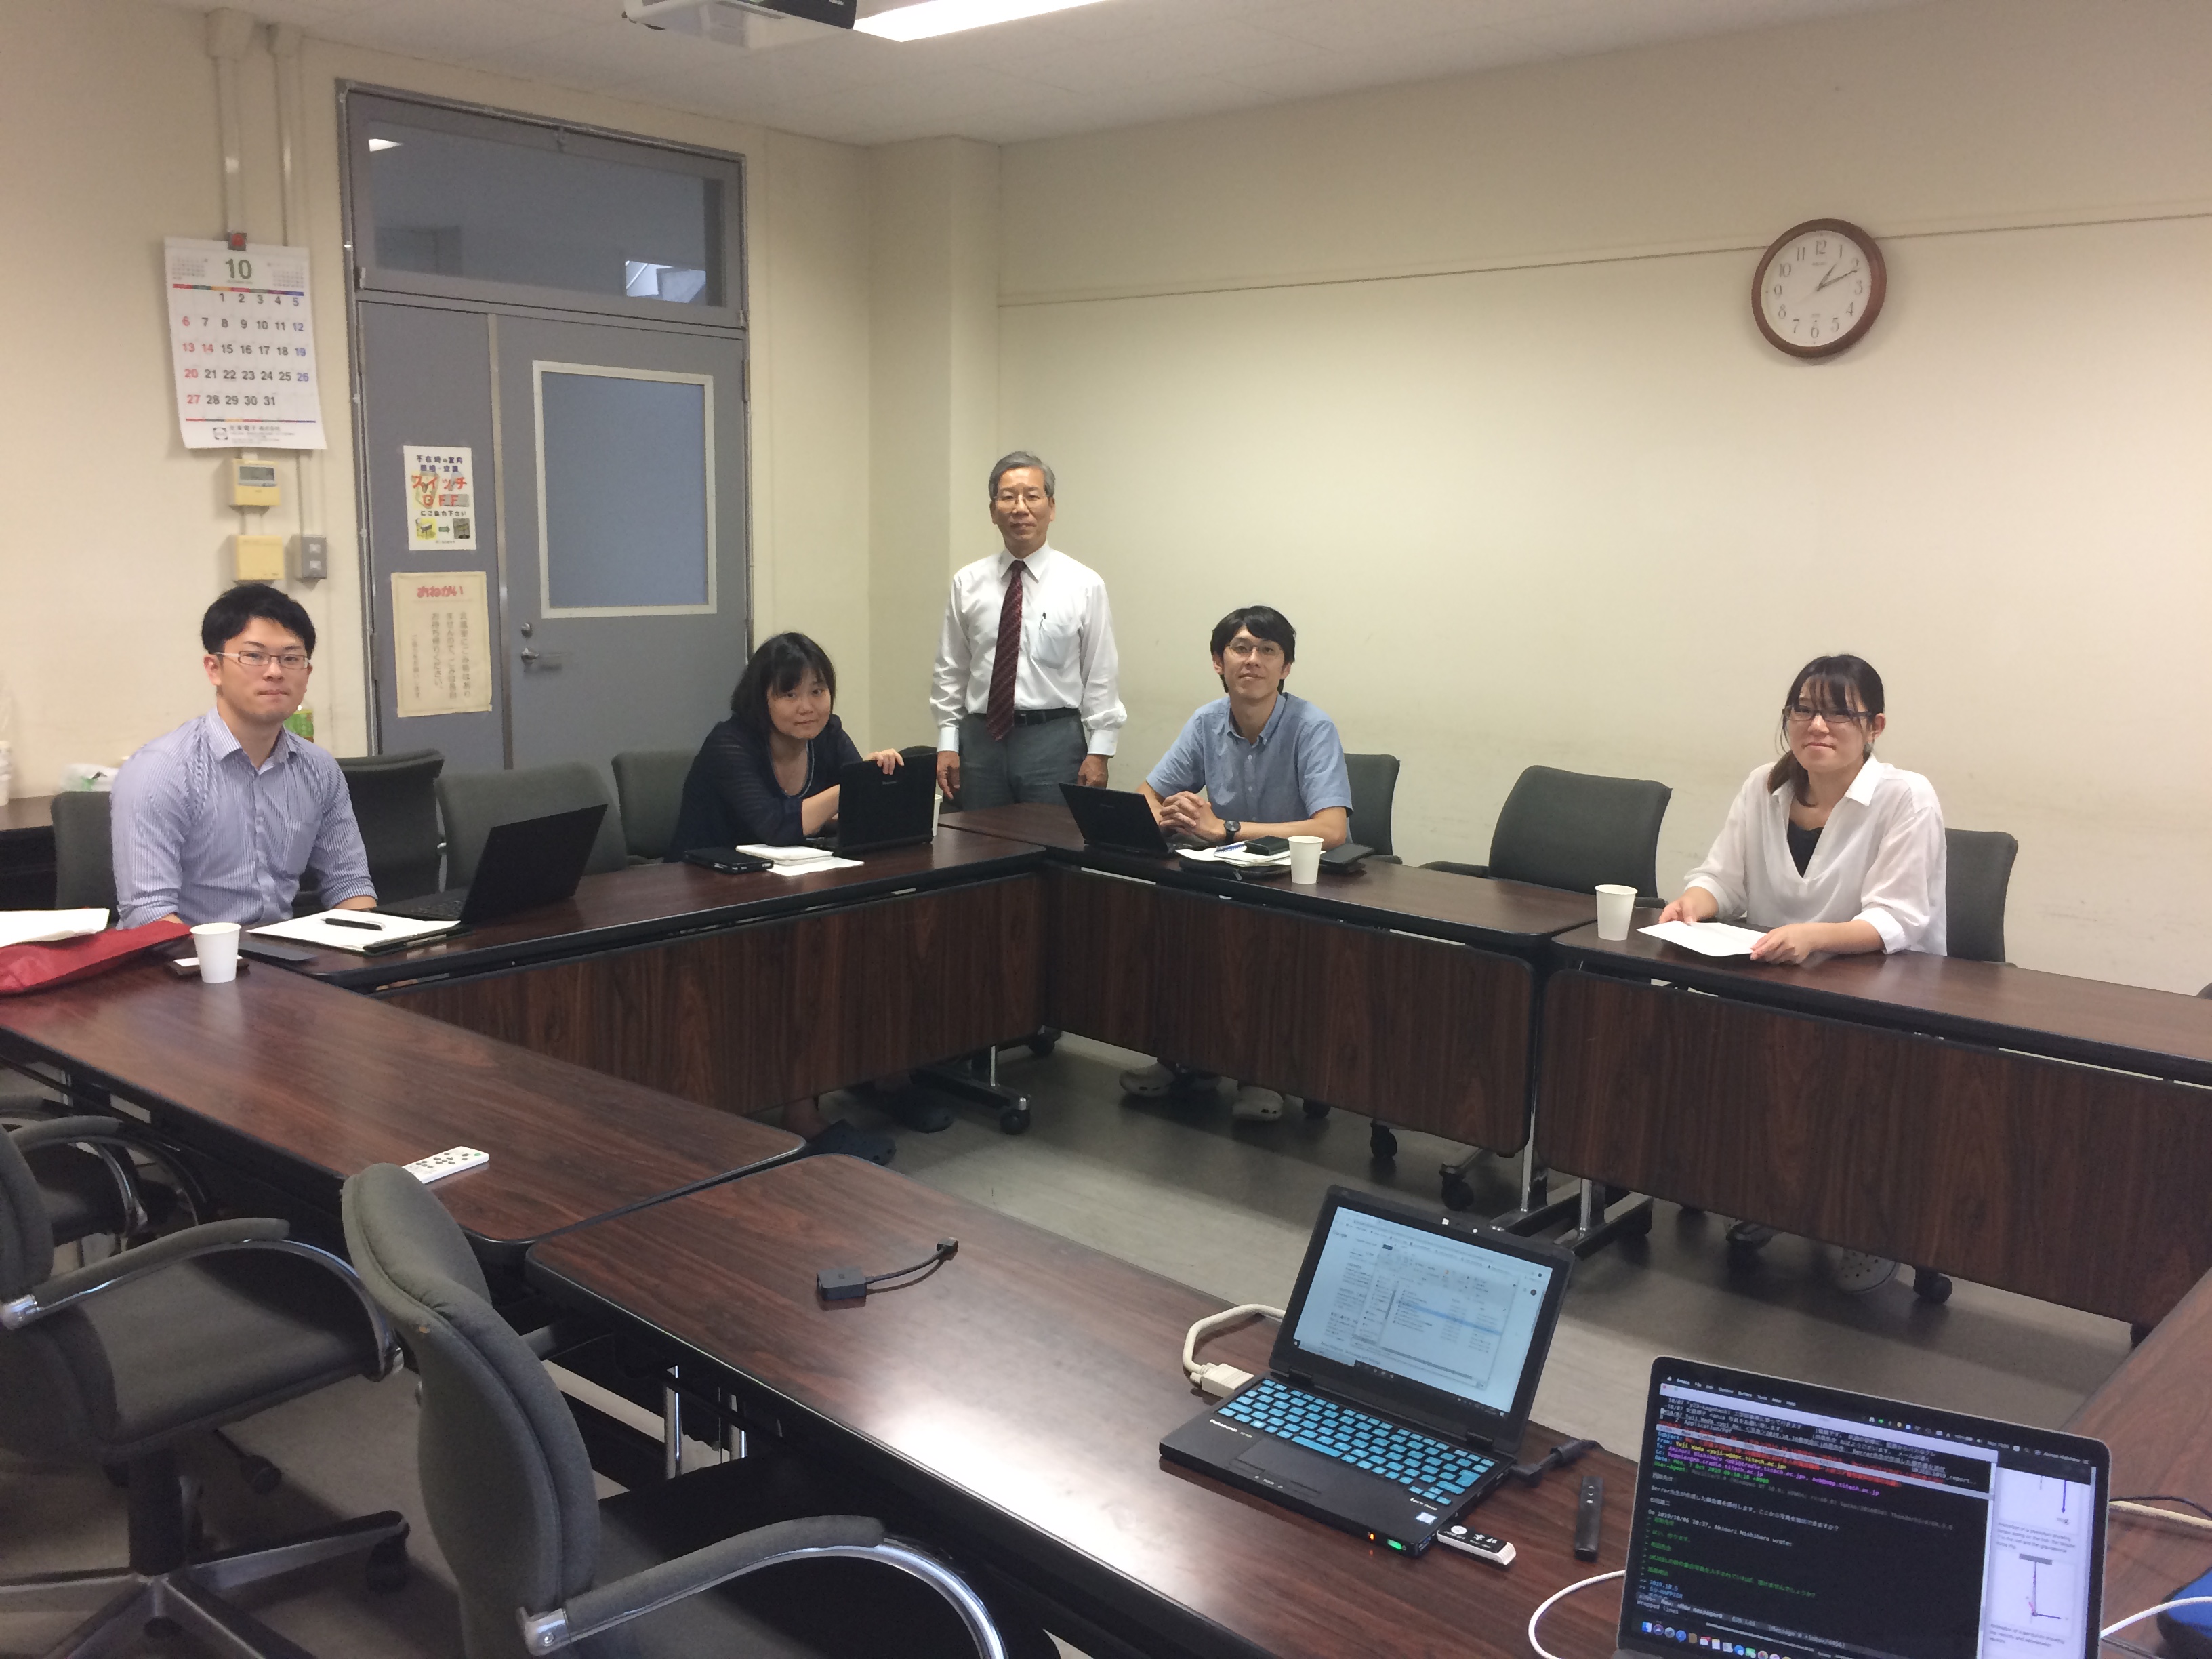 ACE Workshop at Nagoya University